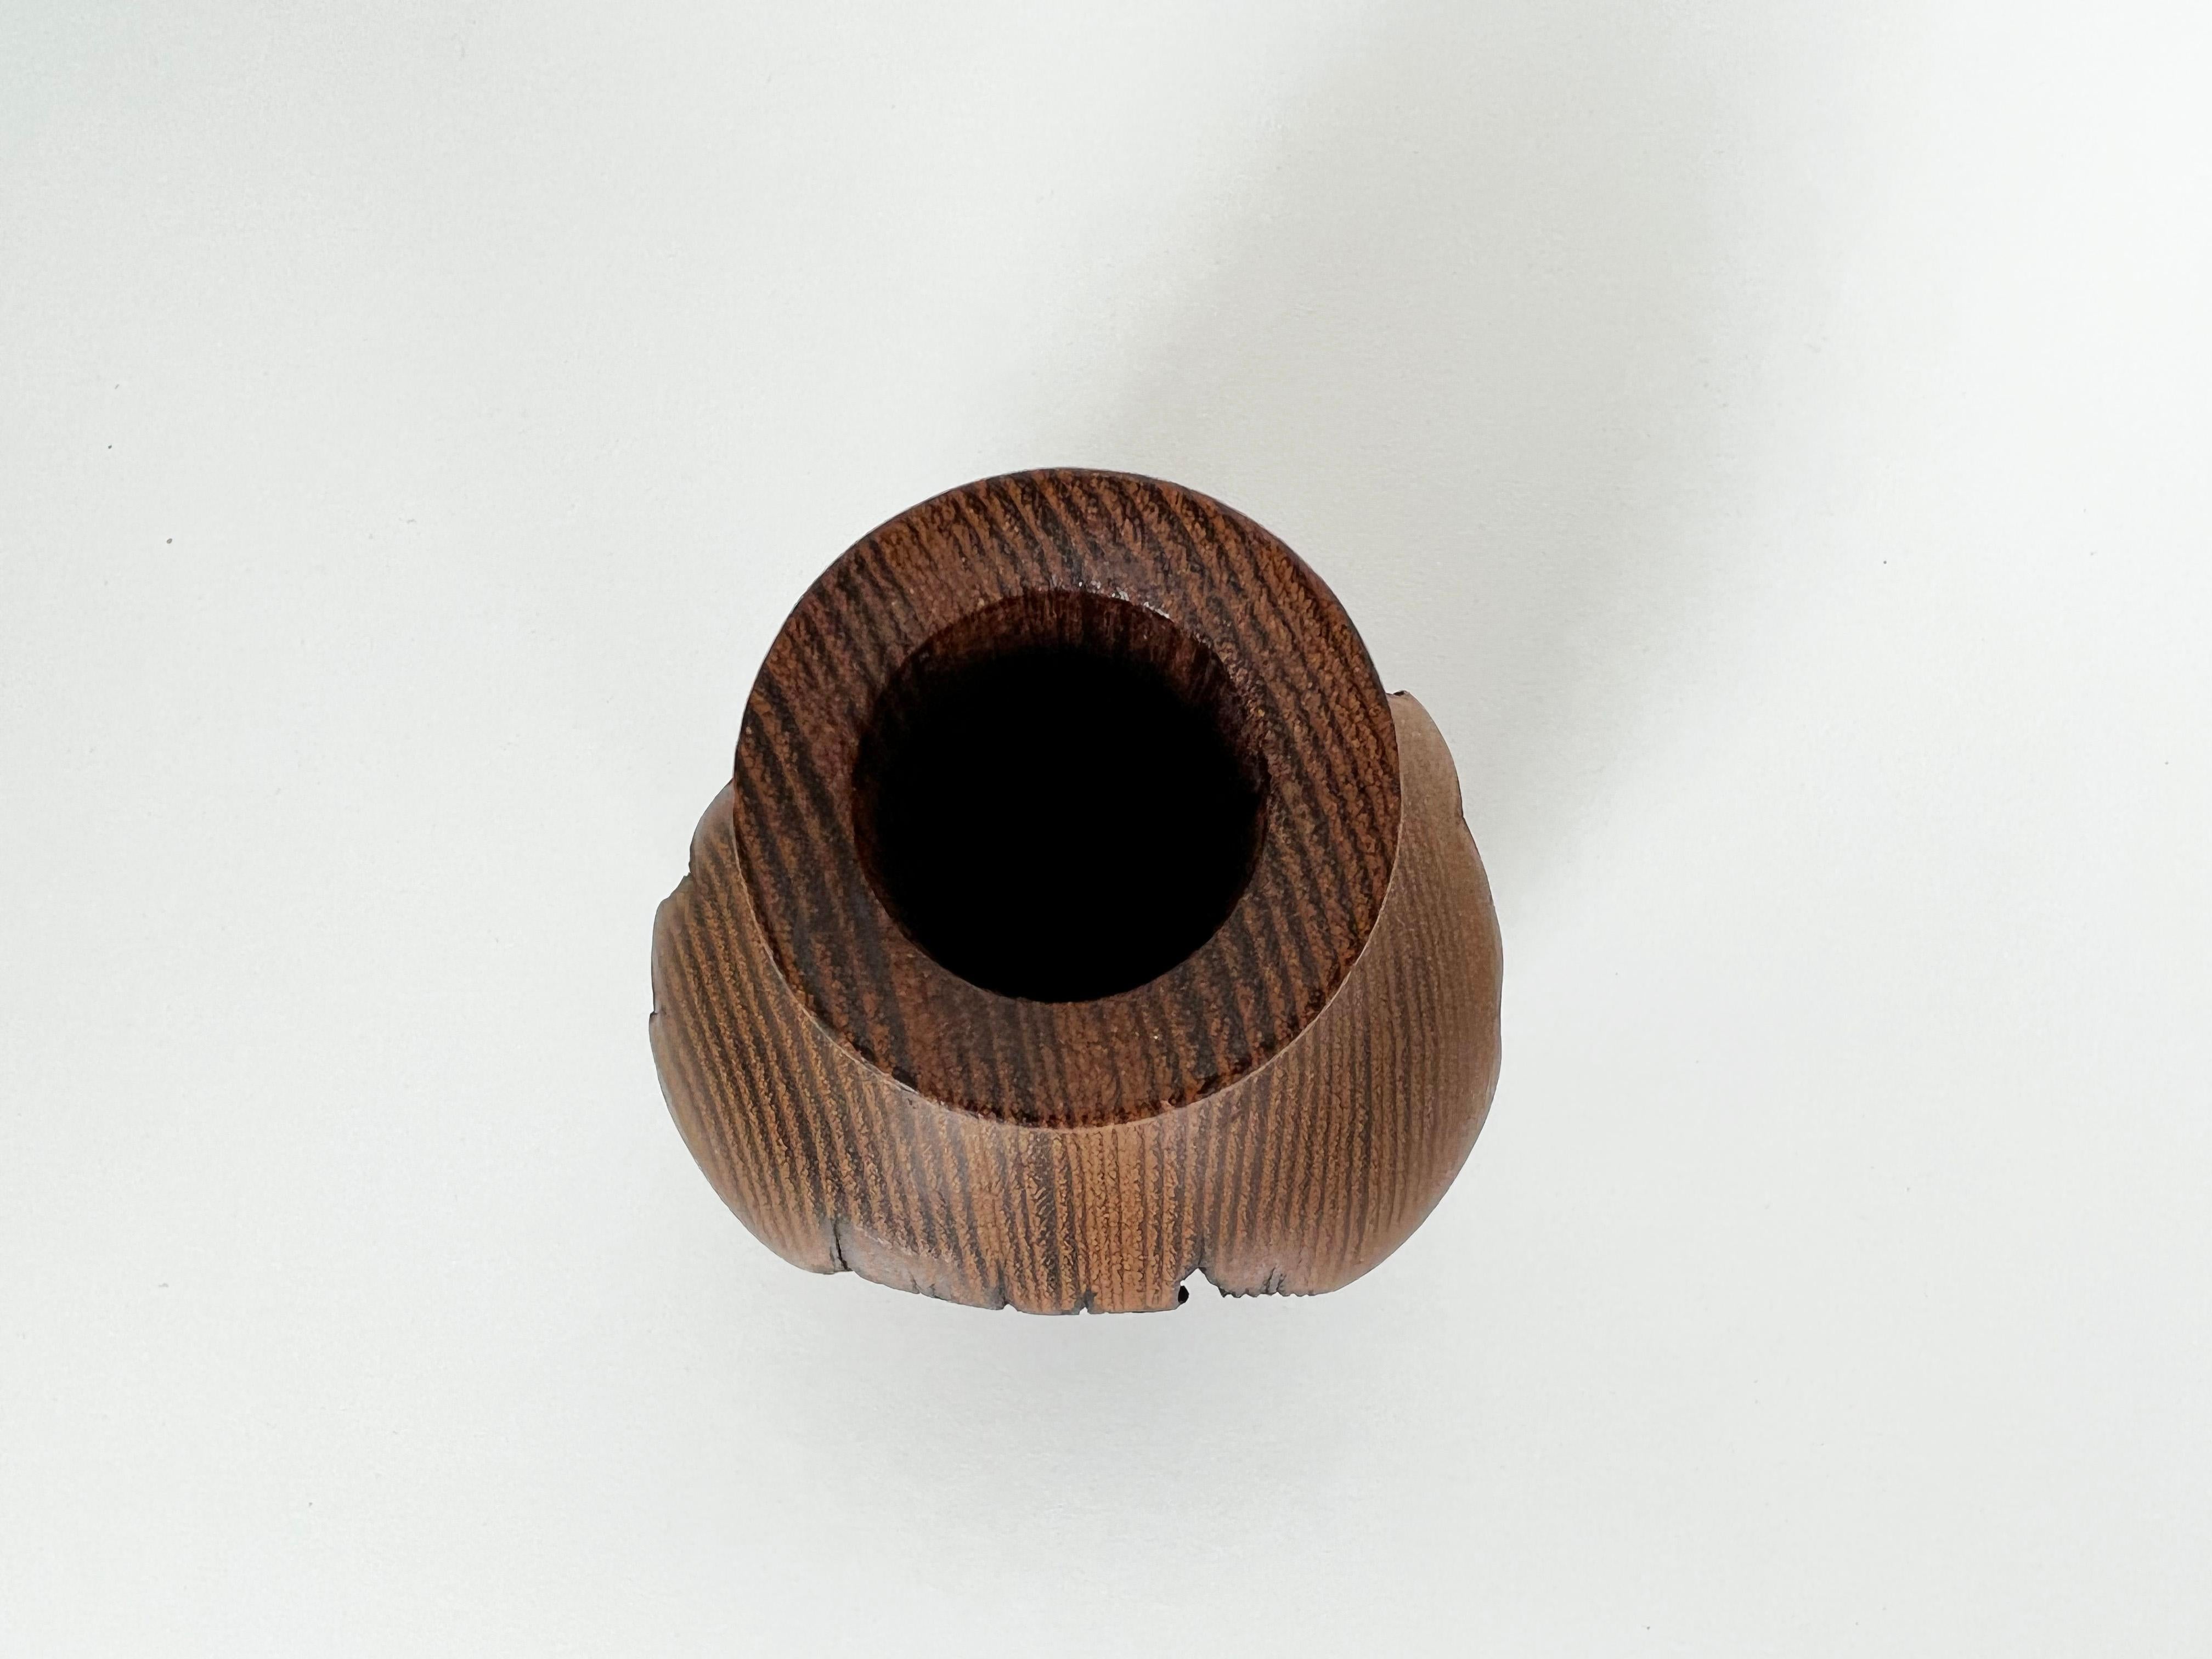 black locust wood vase